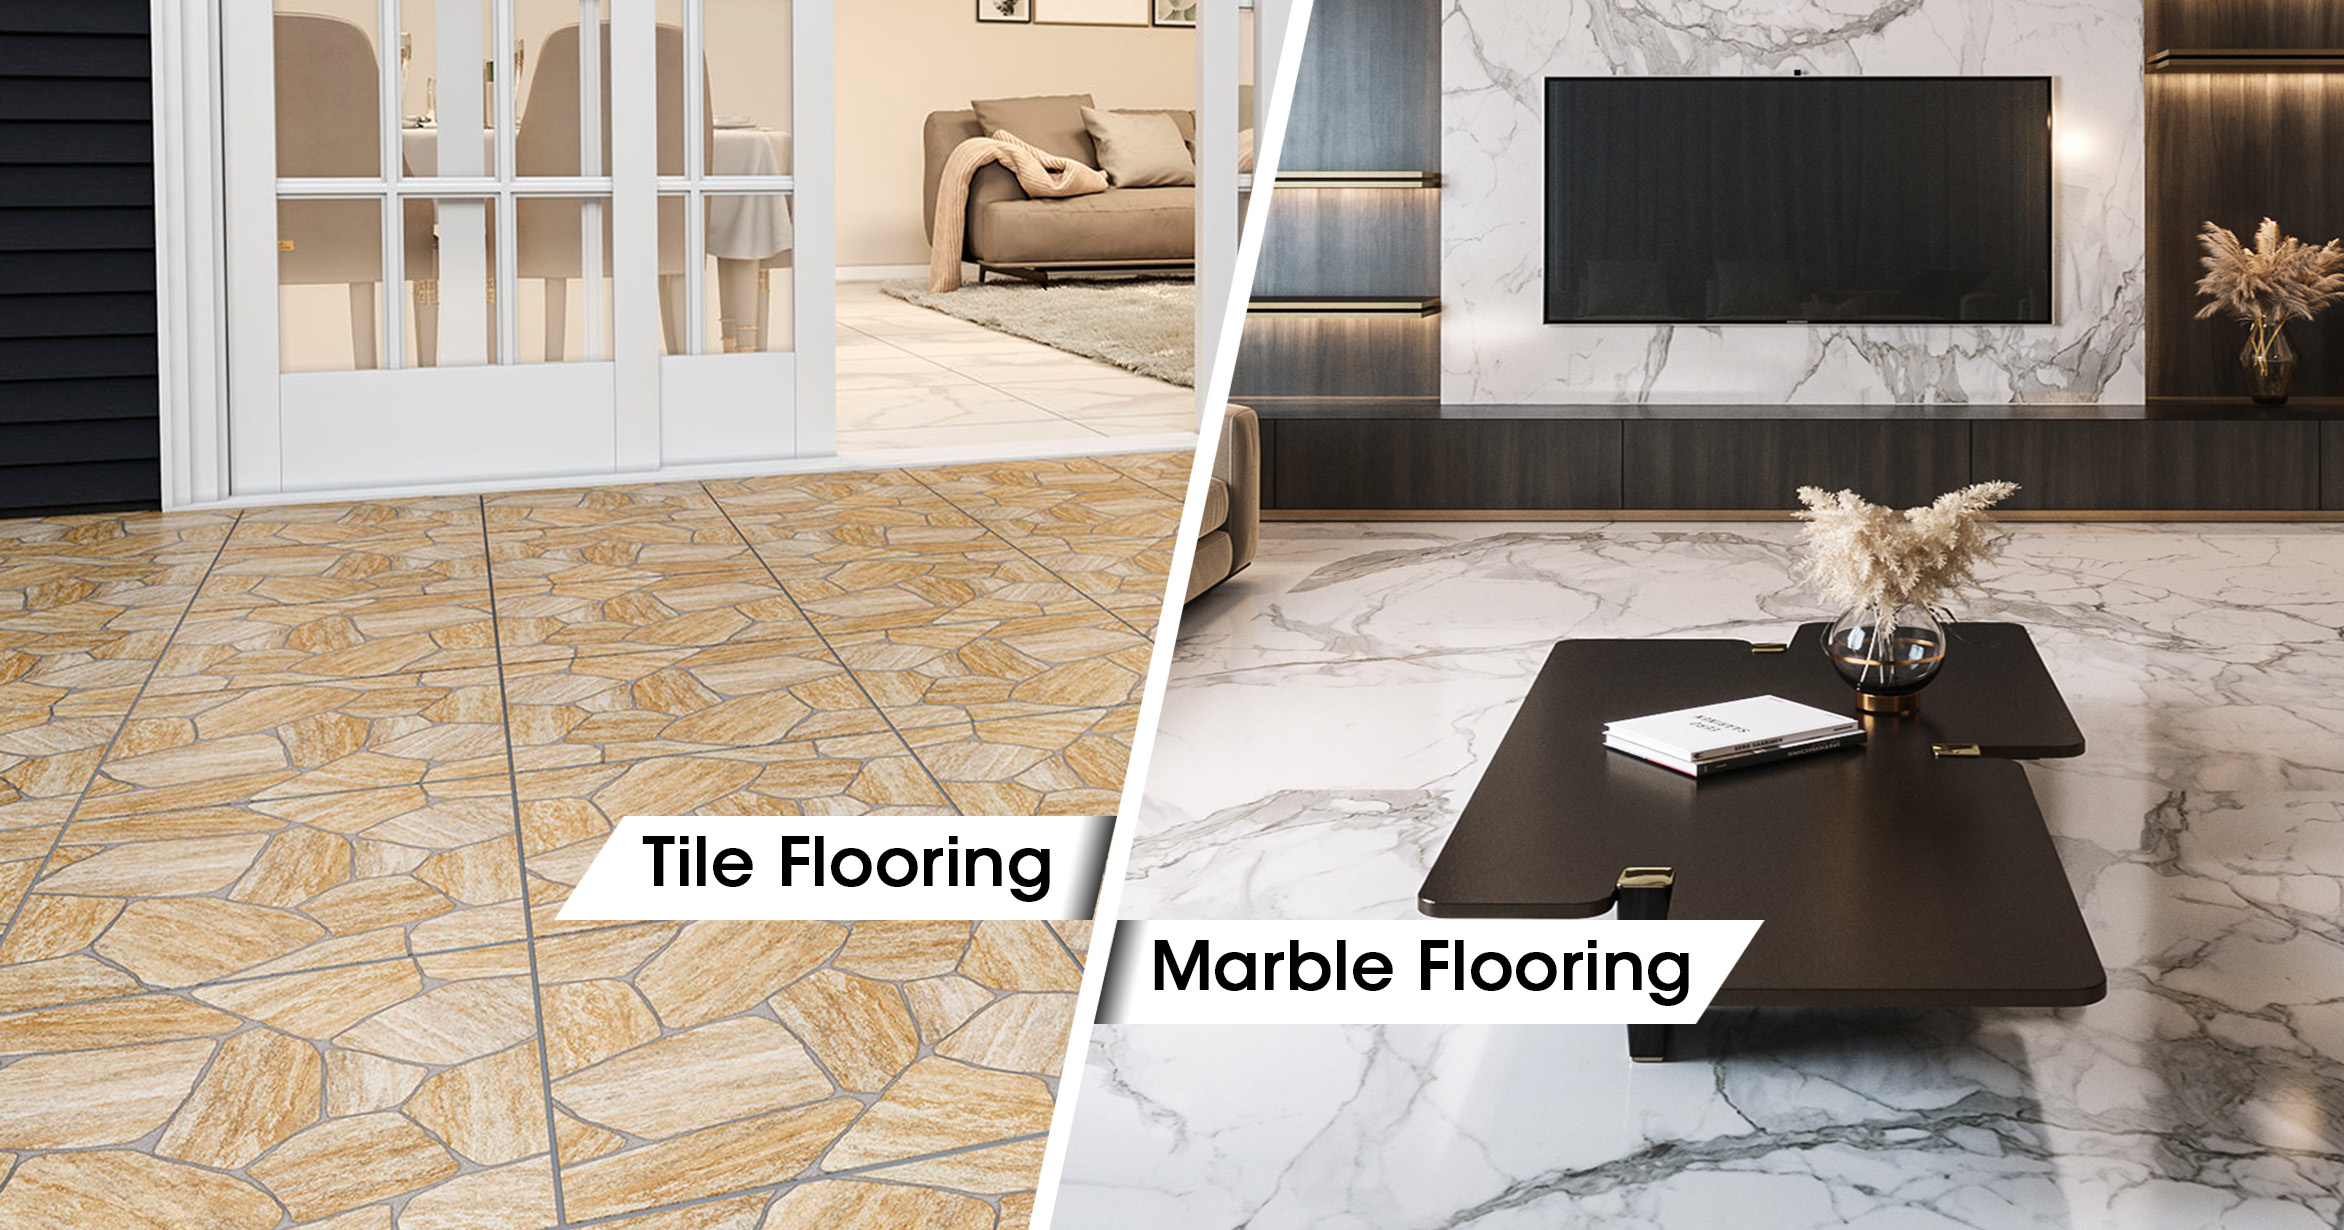 Marble Flooring vs. Tiles Flooring